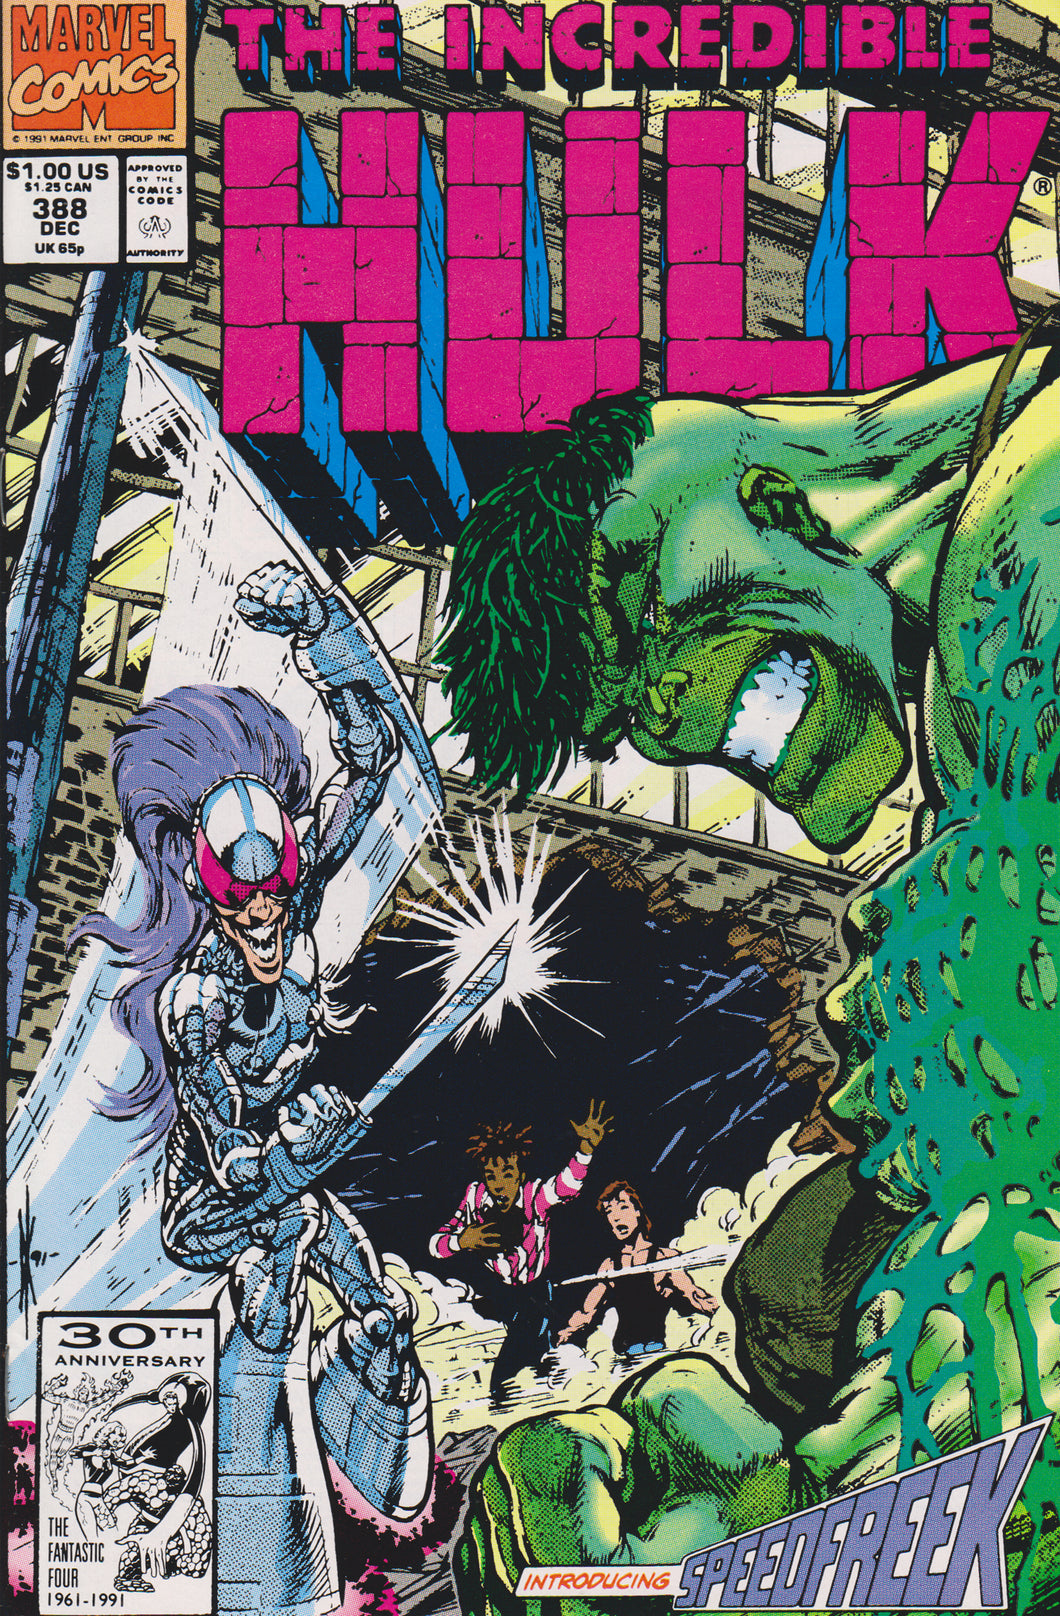 THE INCREDIBLE HULK #388 COMIC BOOK ~ Marvel Comics